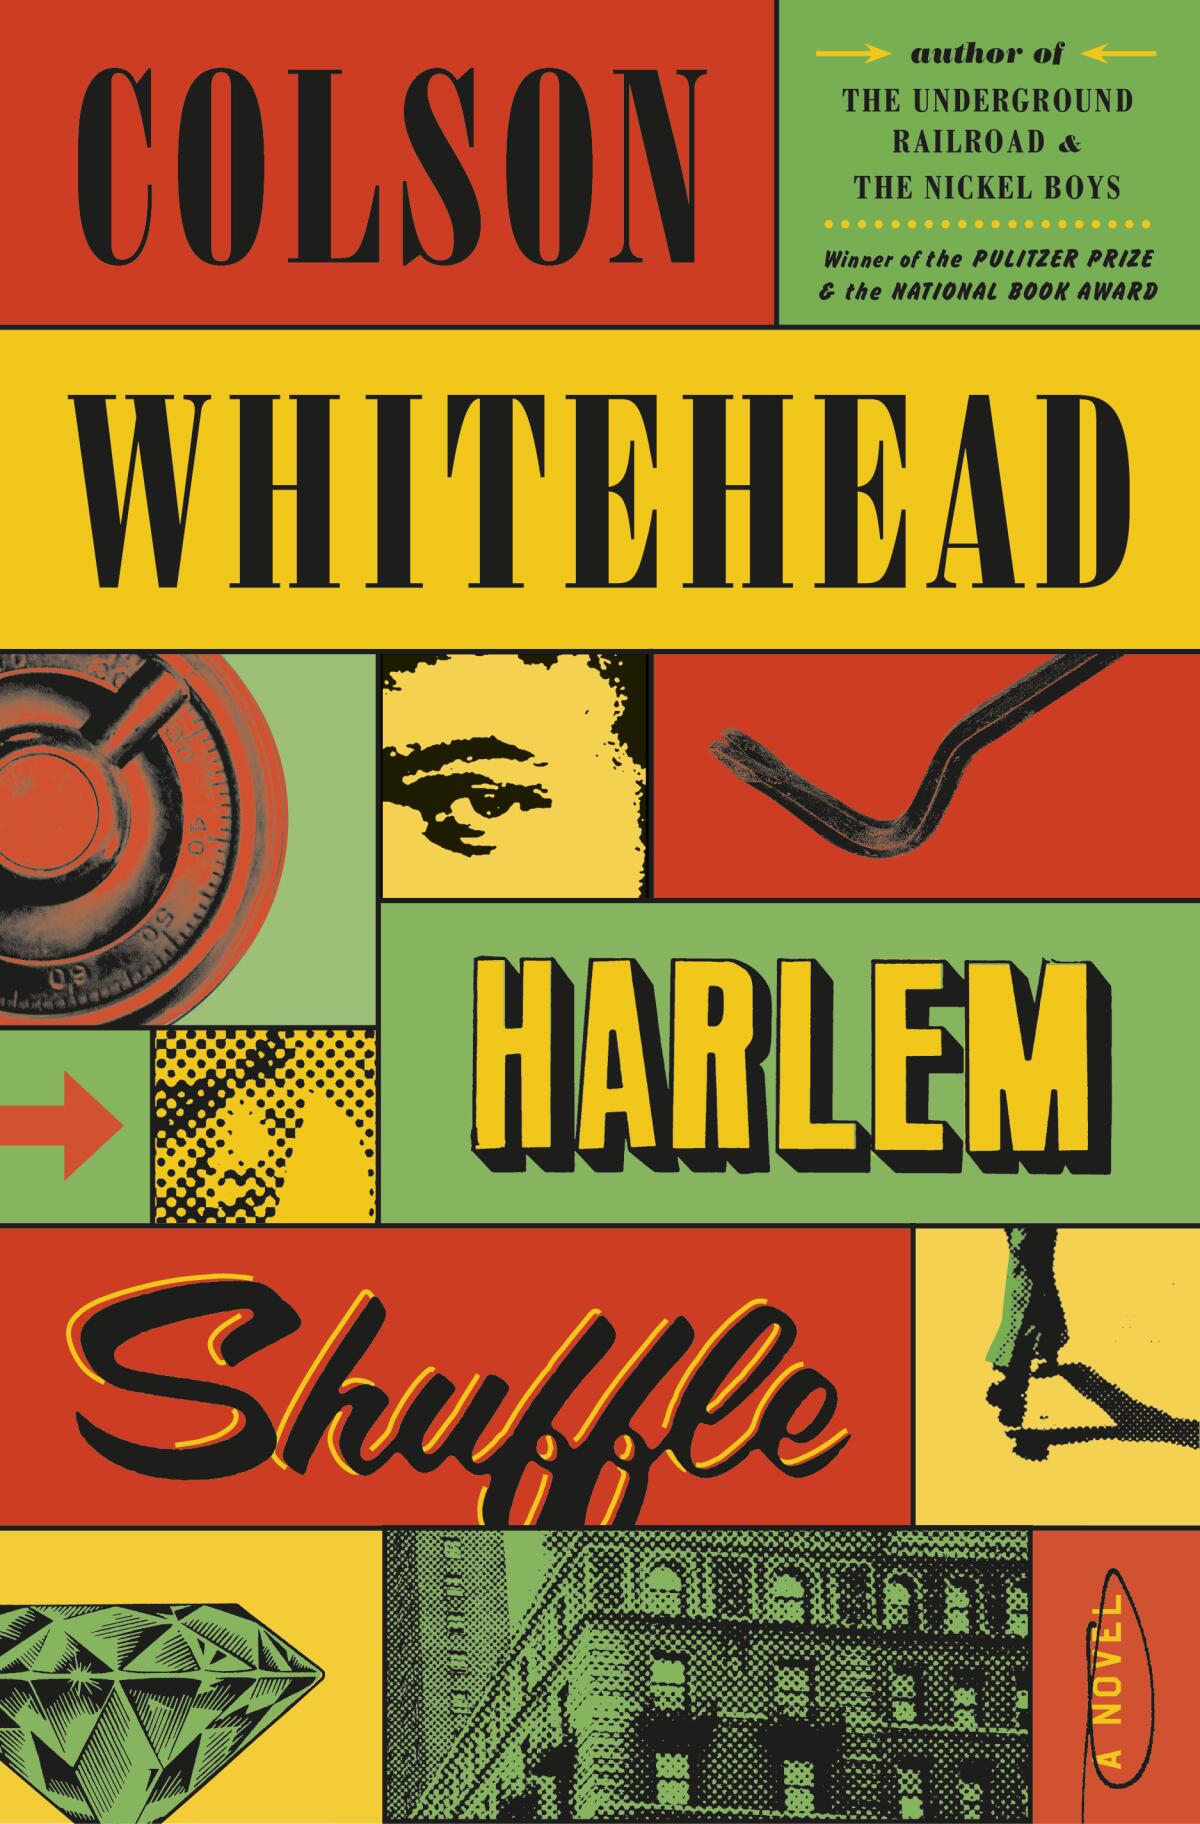 "Harlem Shuffle," by Colson Whitehead